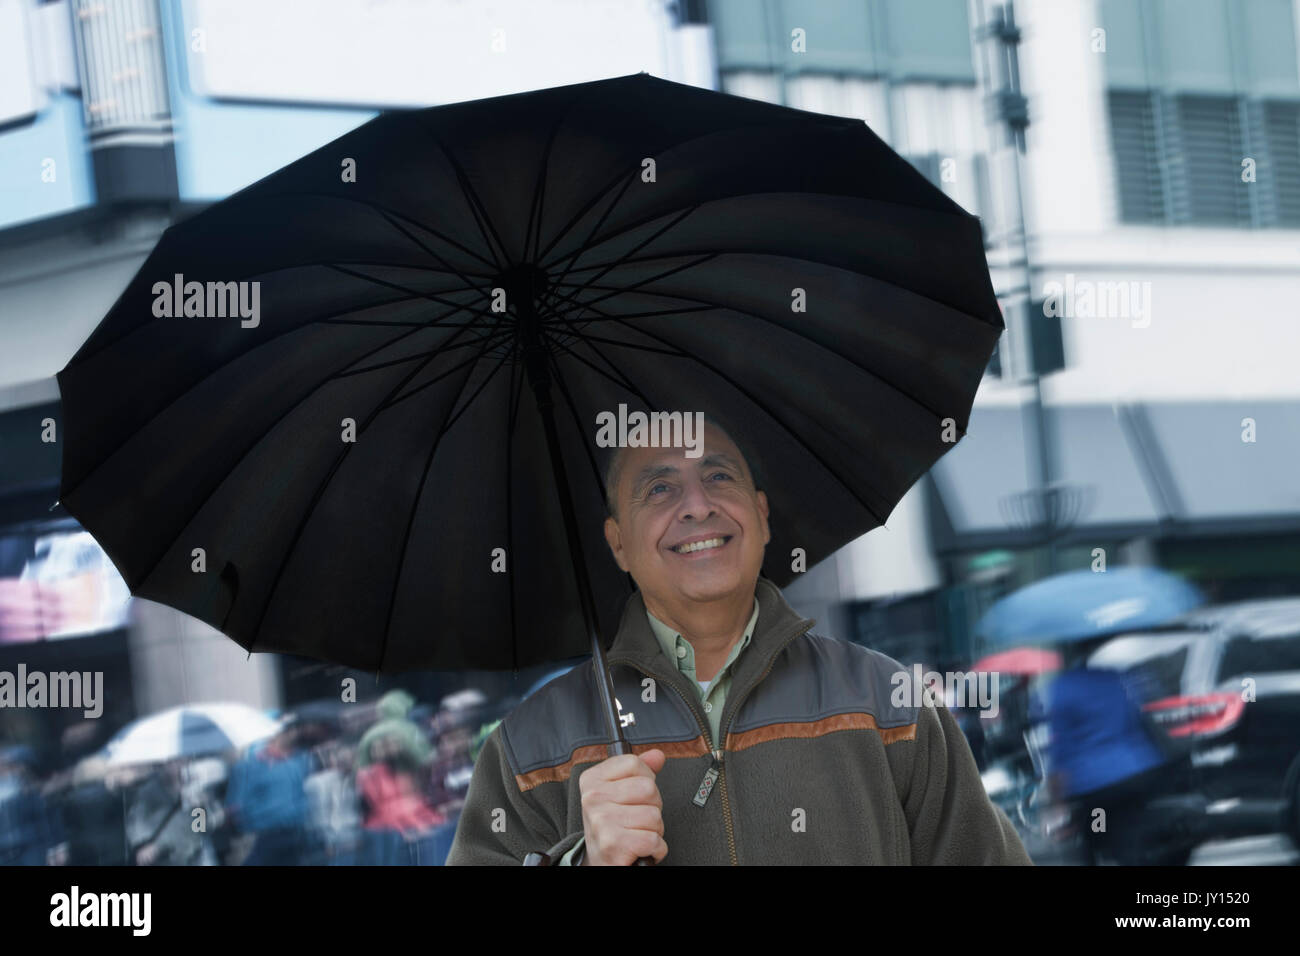 Smiling Hispanic man holding umbrella in city Stock Photo